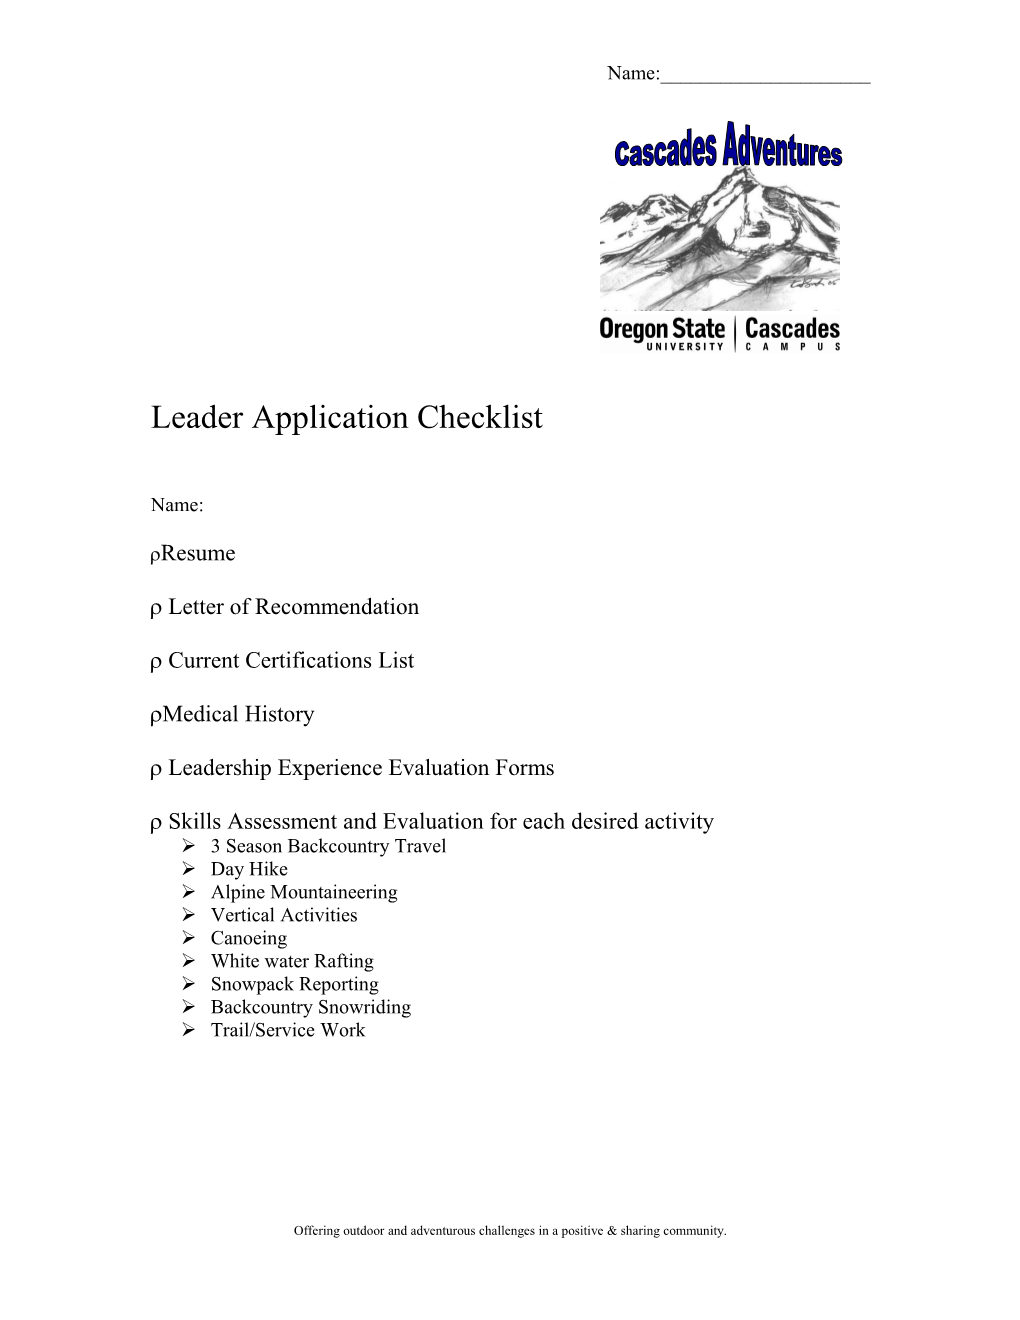 Leader Application Checklist